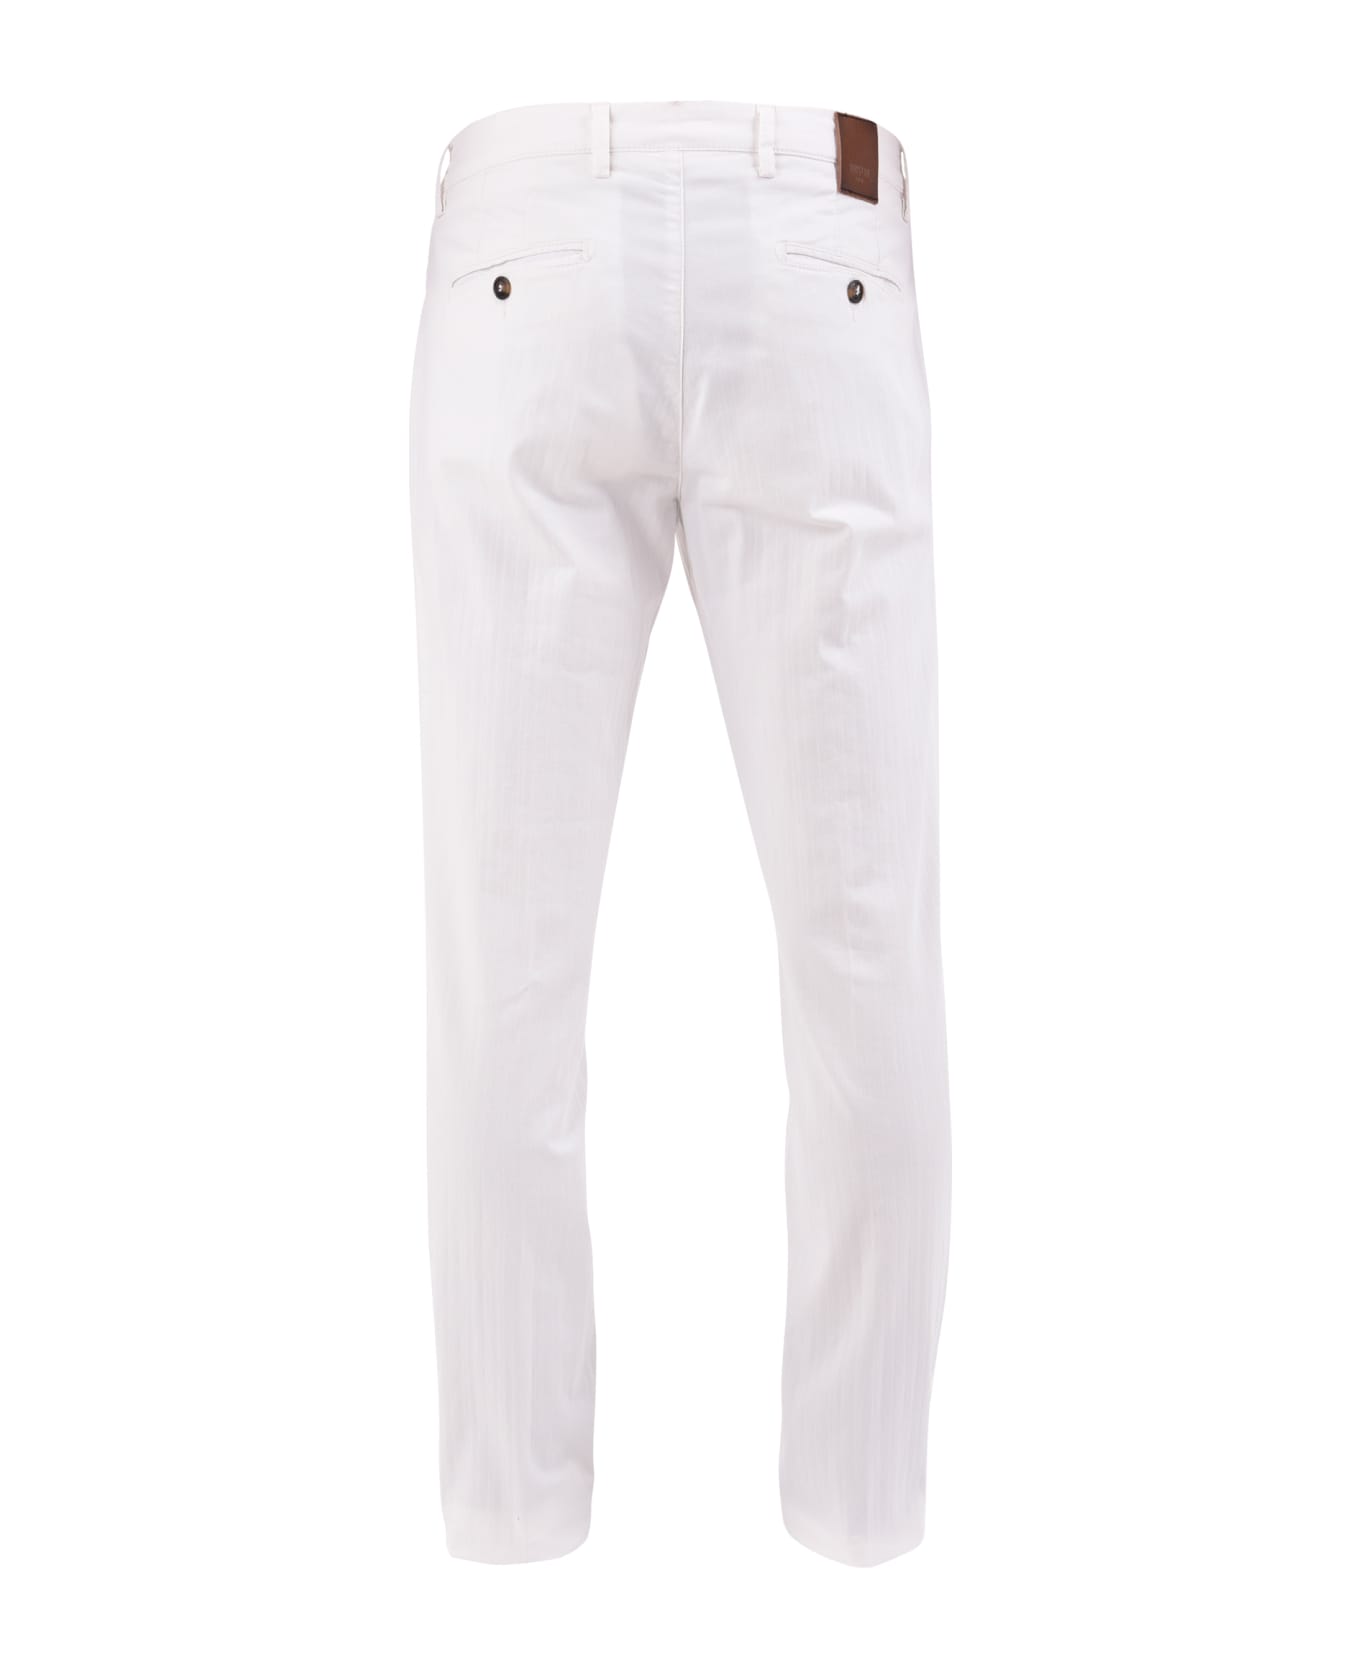 Briglia 1949 White Trousers - White ボトムス